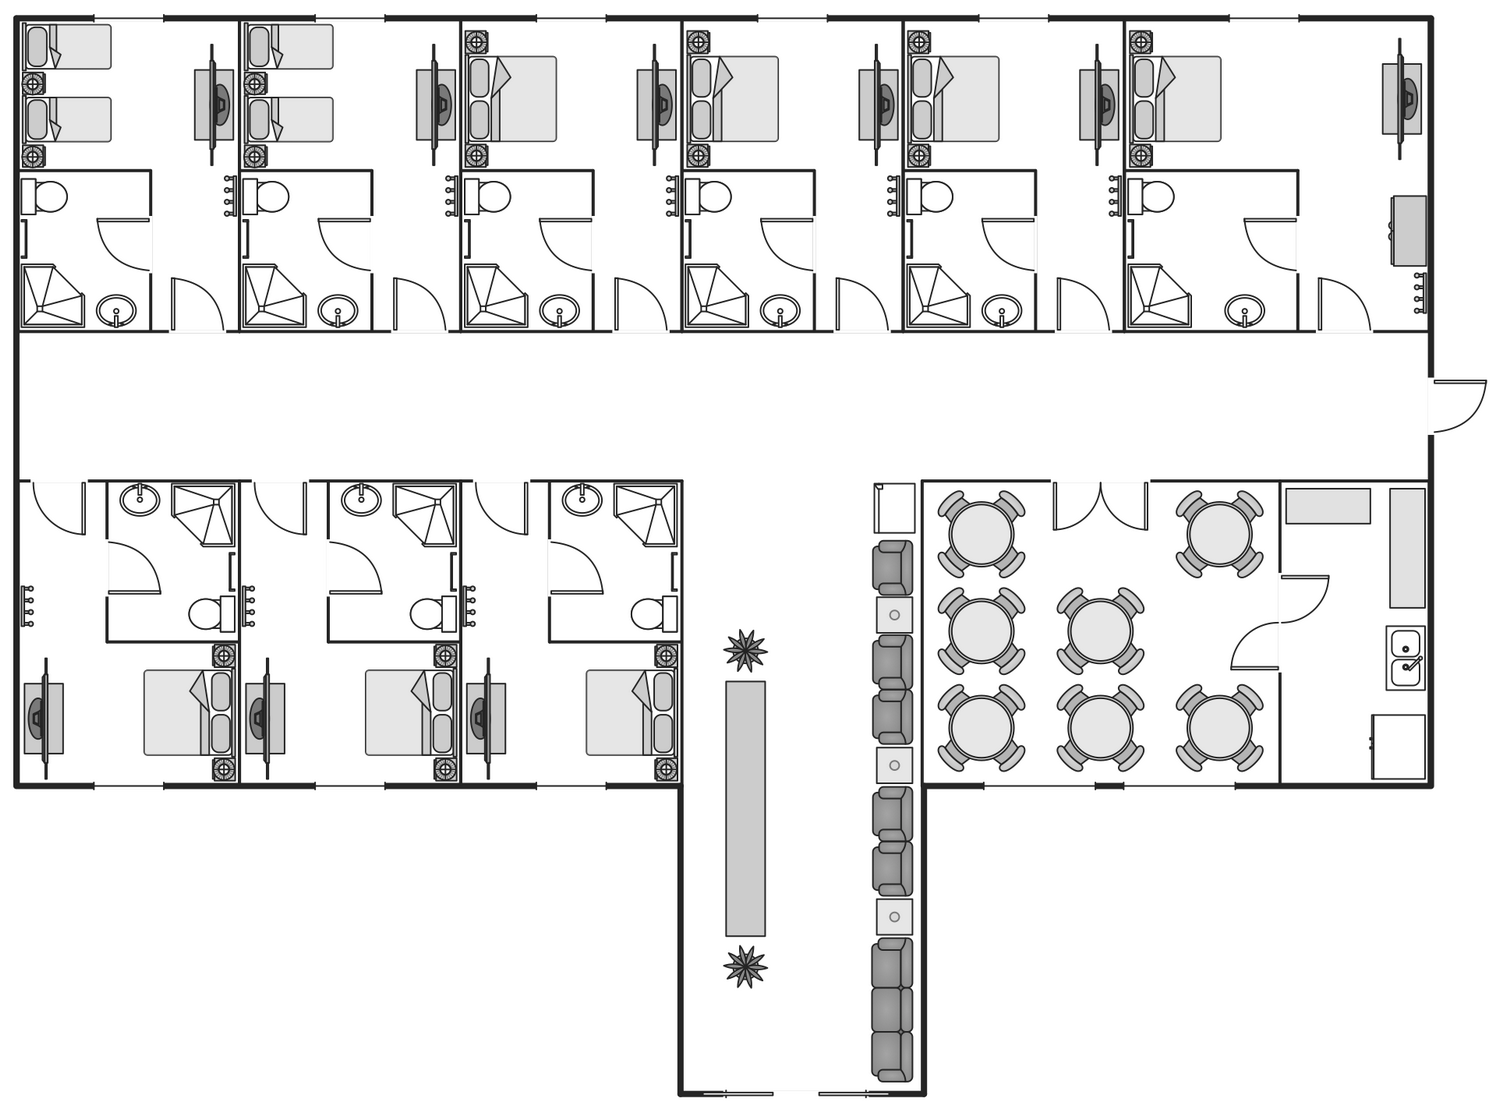 Basic Floor Plan - Mini Hotel Floor Plan